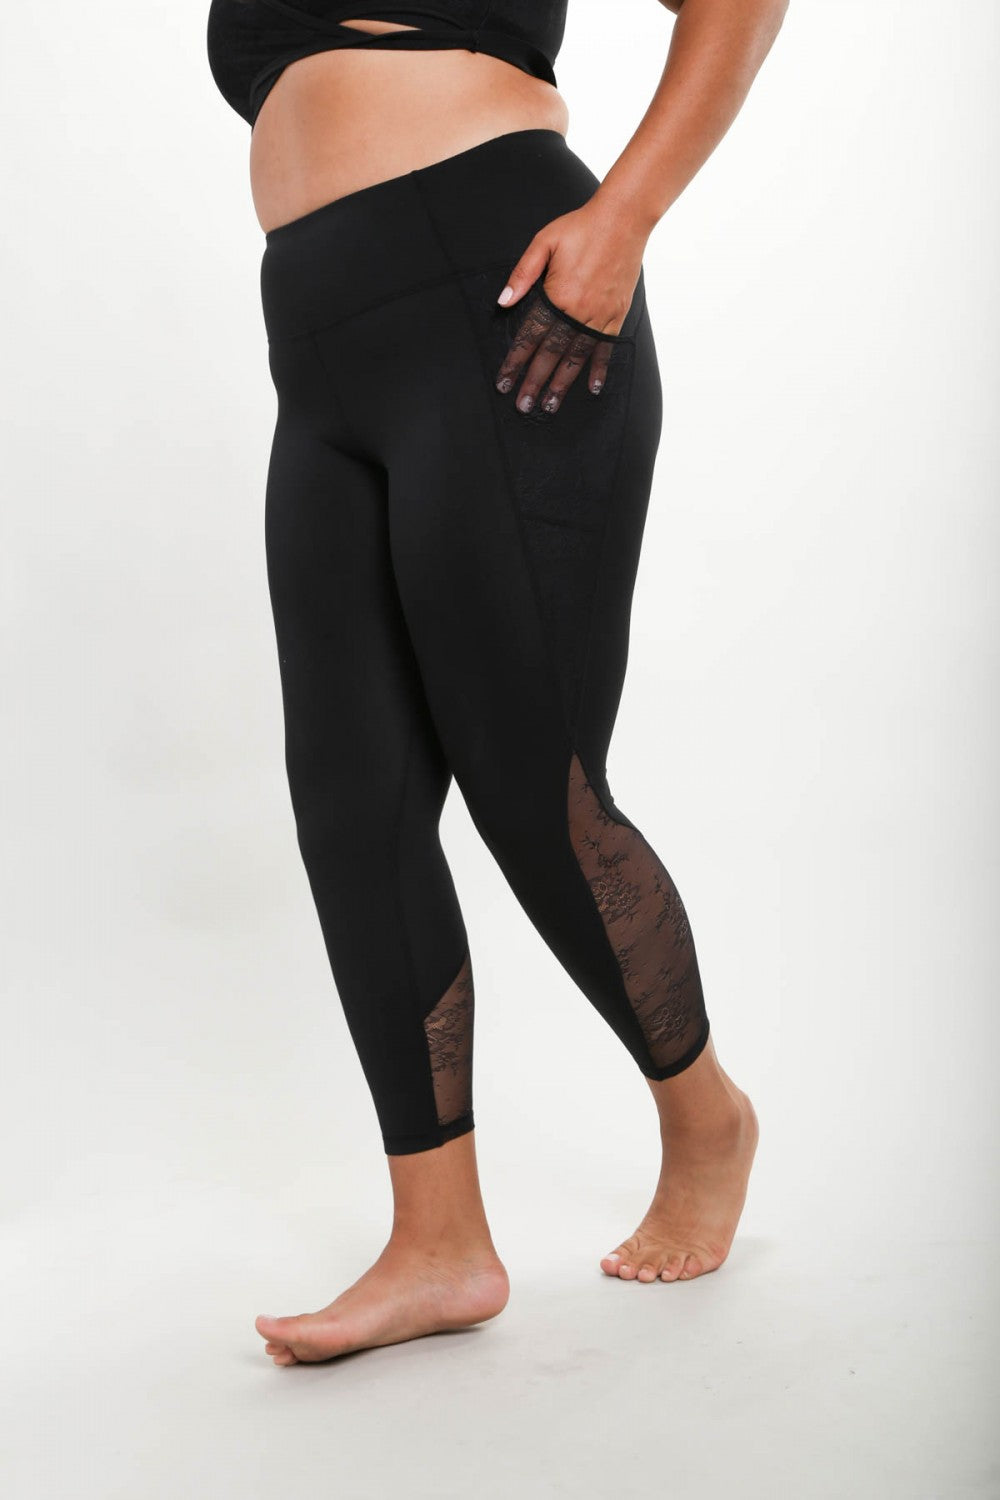 Shein Curve 3XL plus size floral black love mesh leggings & bra athletic  wear